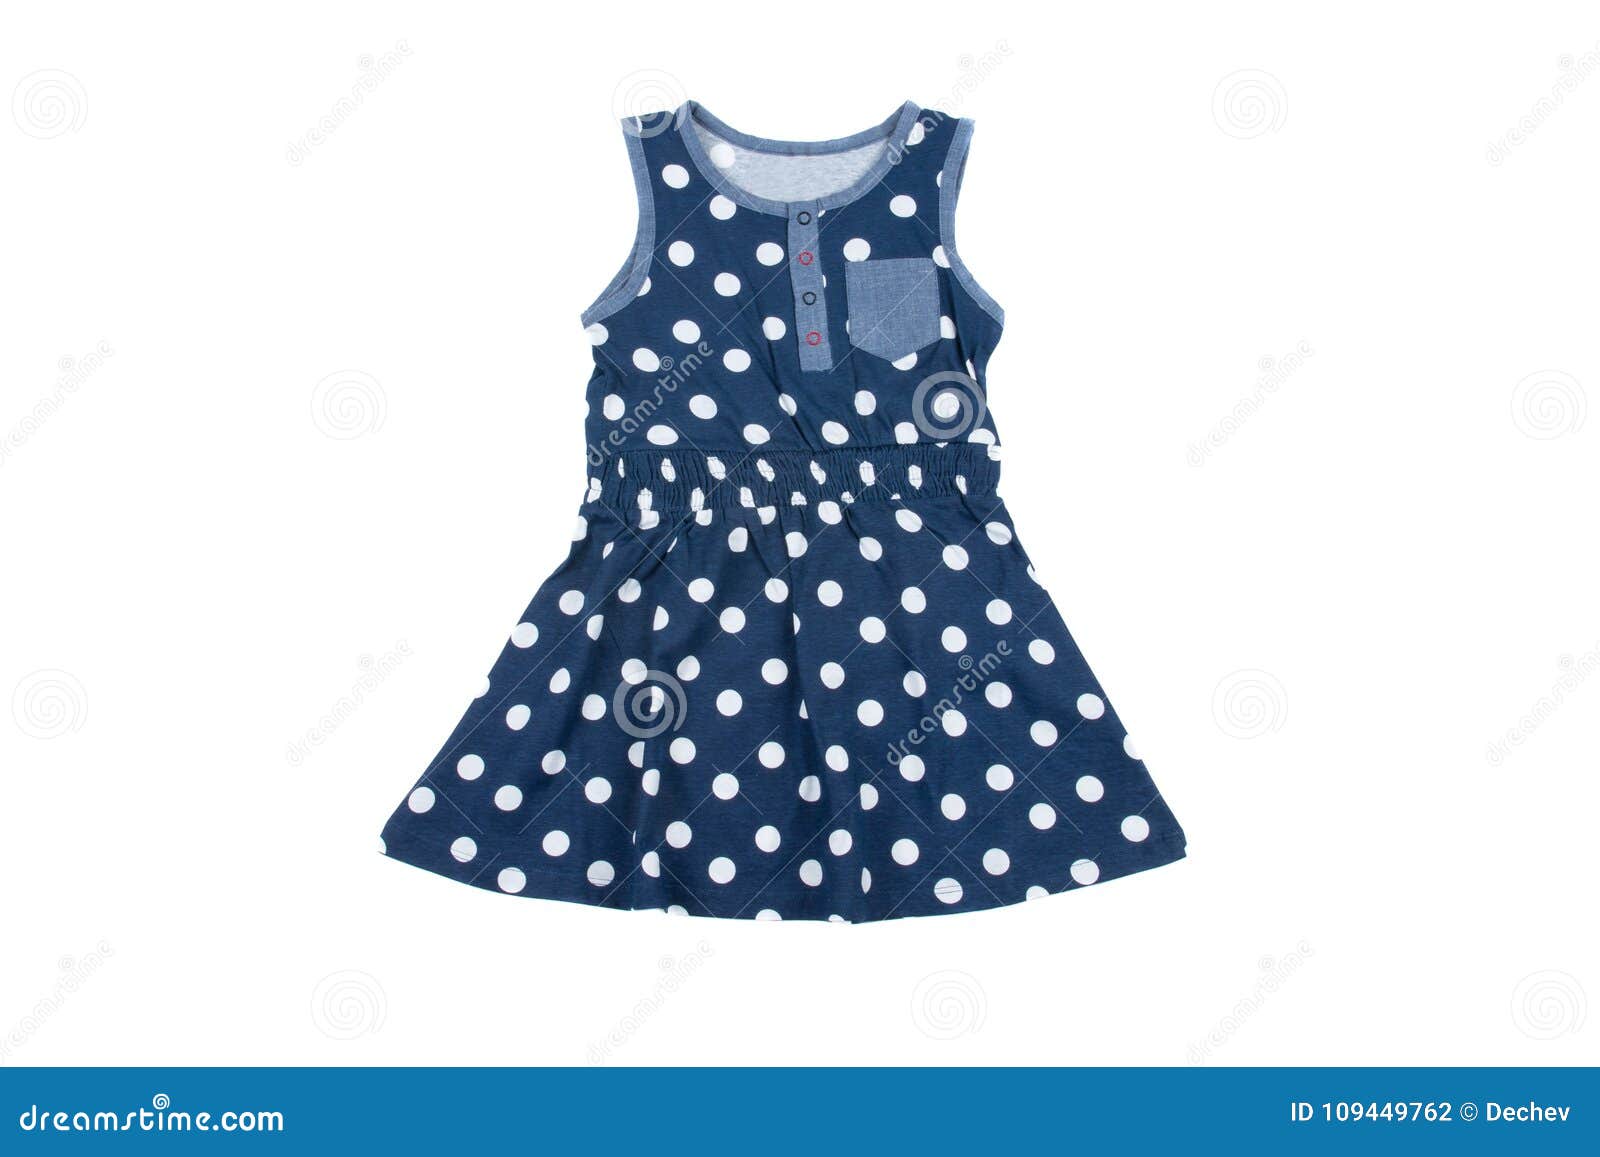 Blue and white polka dot dress girls